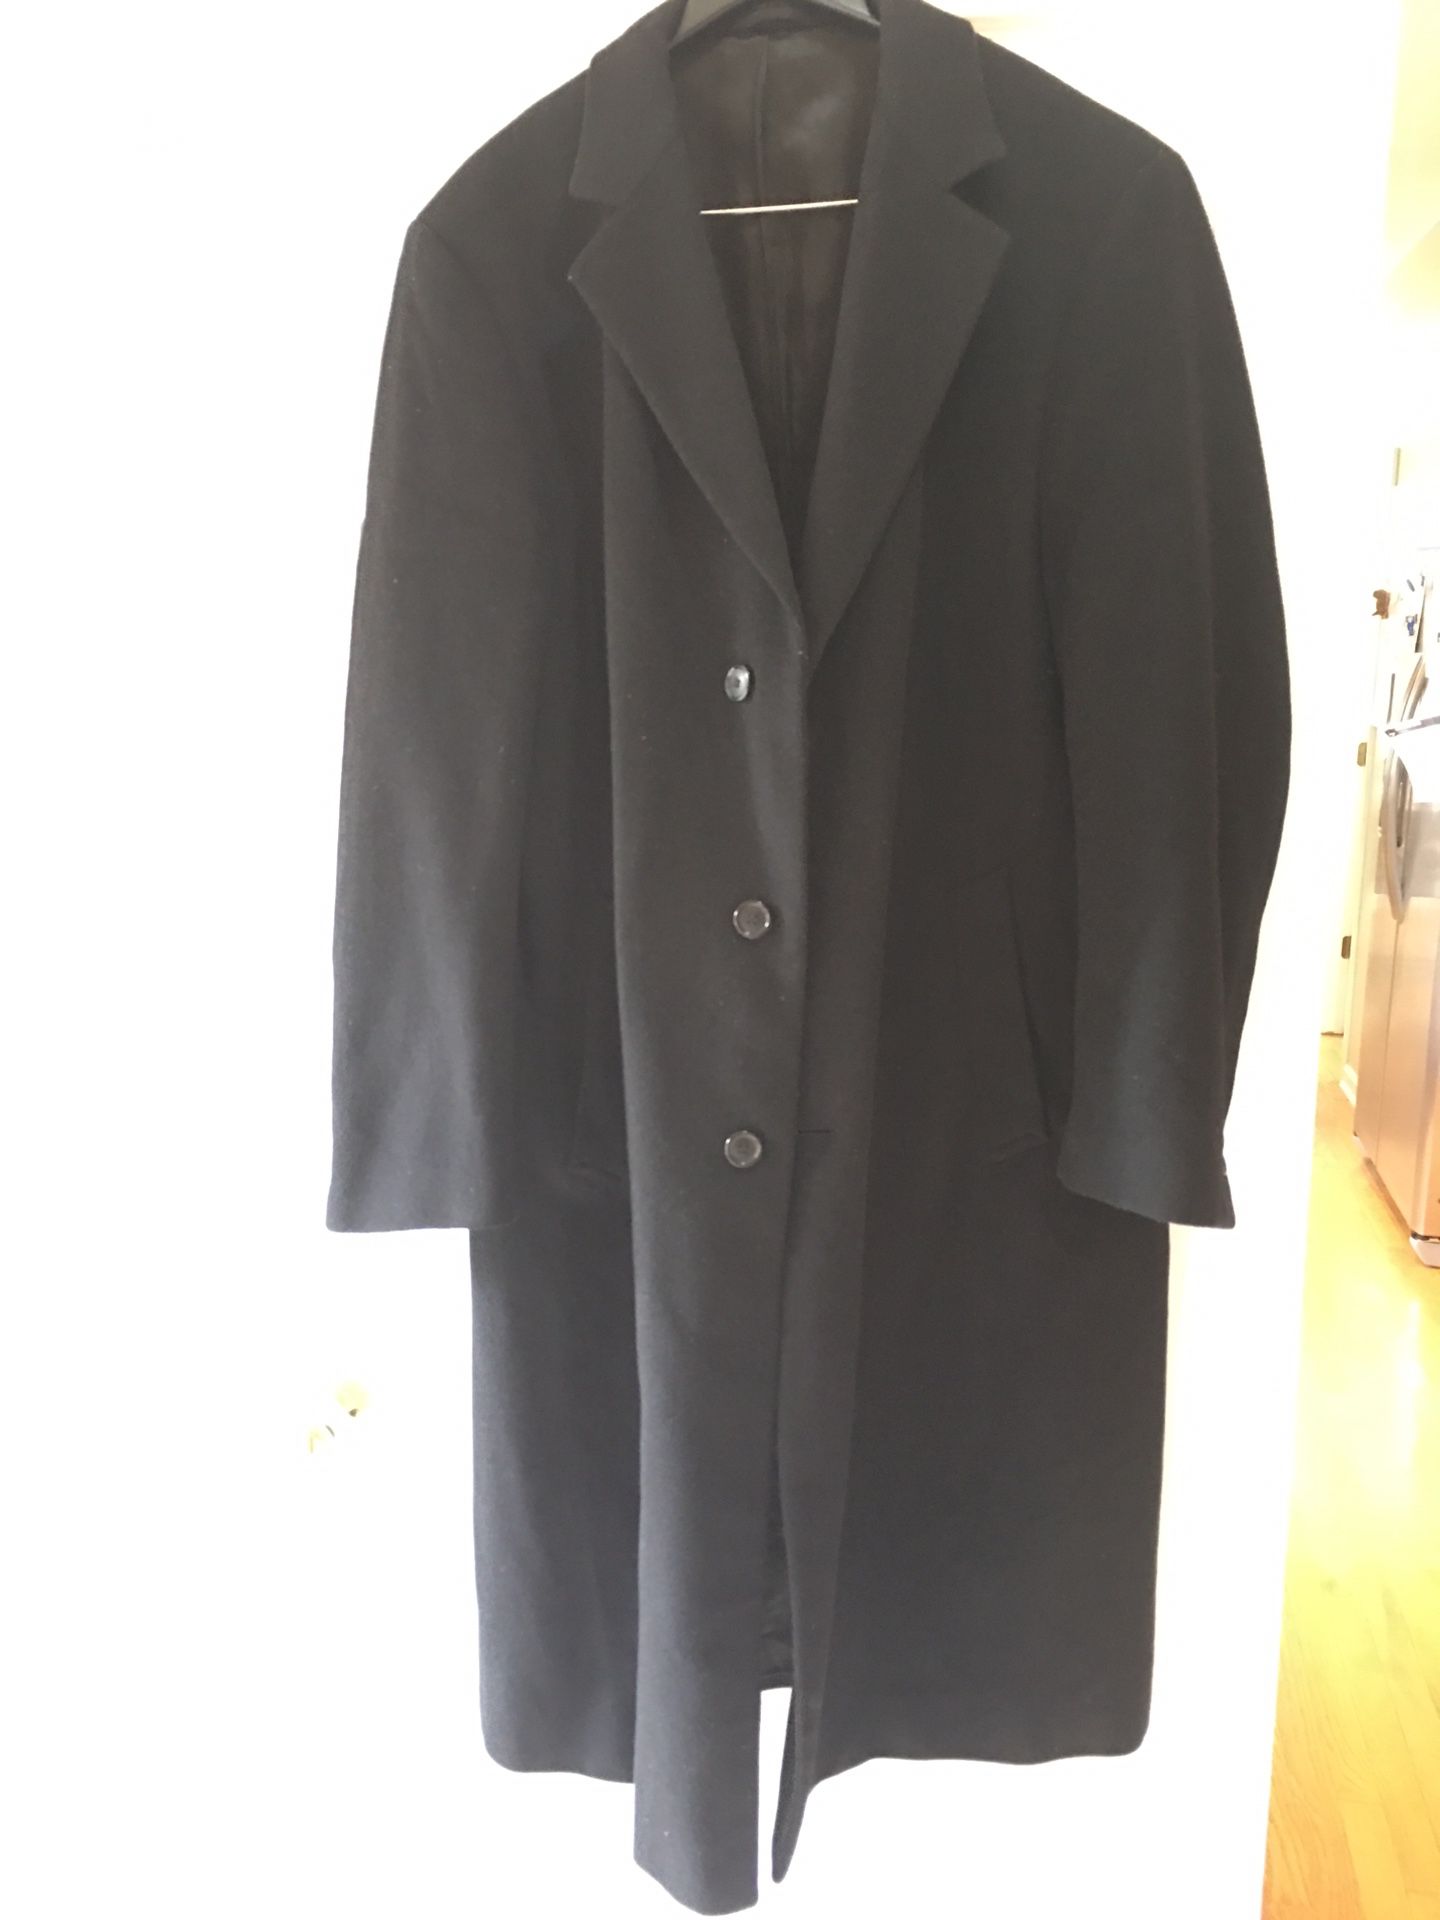 StAfford WOOL winter COAT / Men’s long coat (large 44)